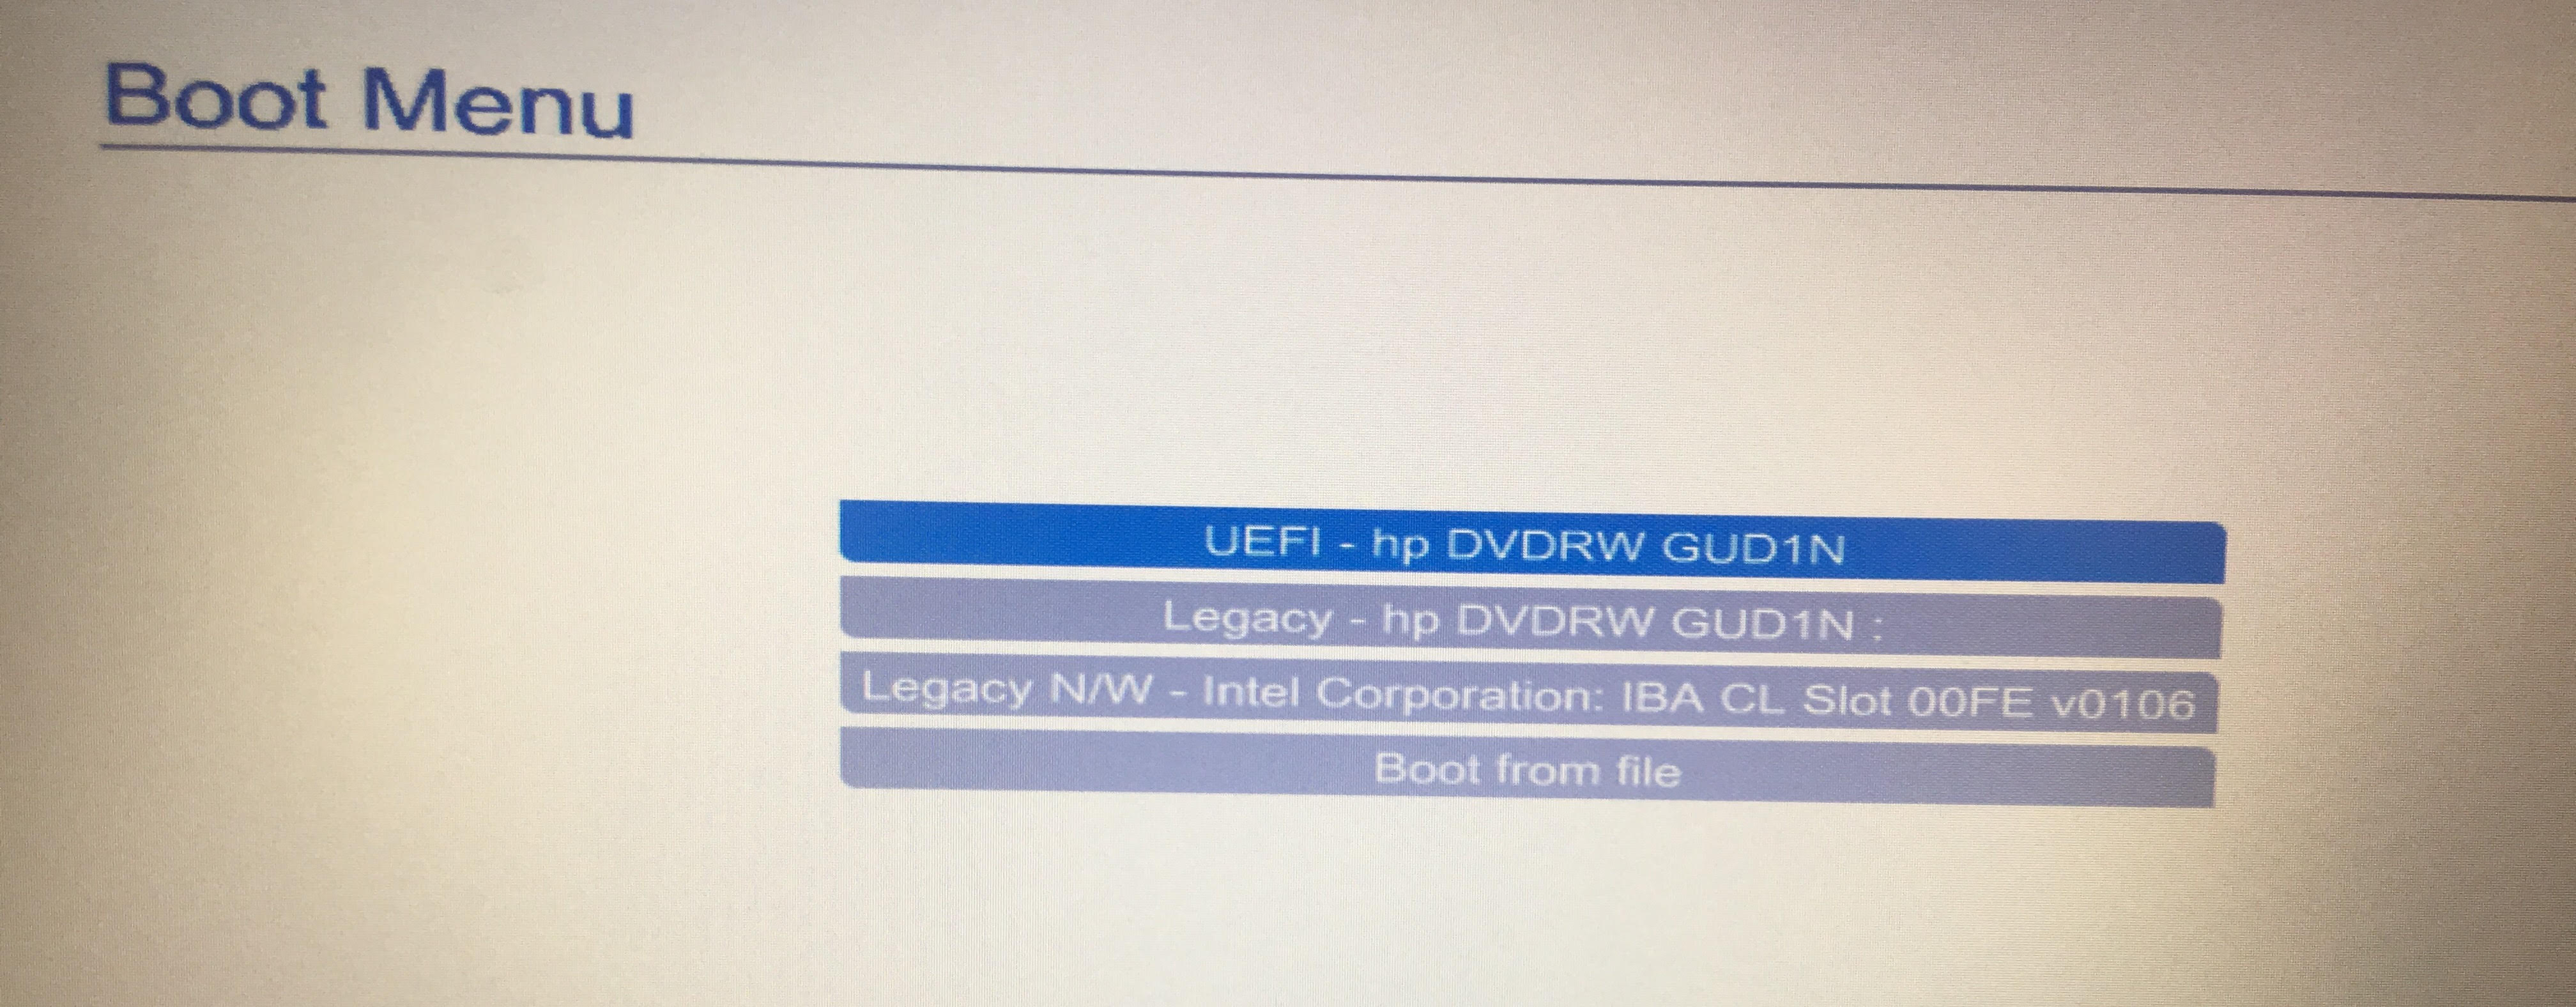 legacy boot.jpg